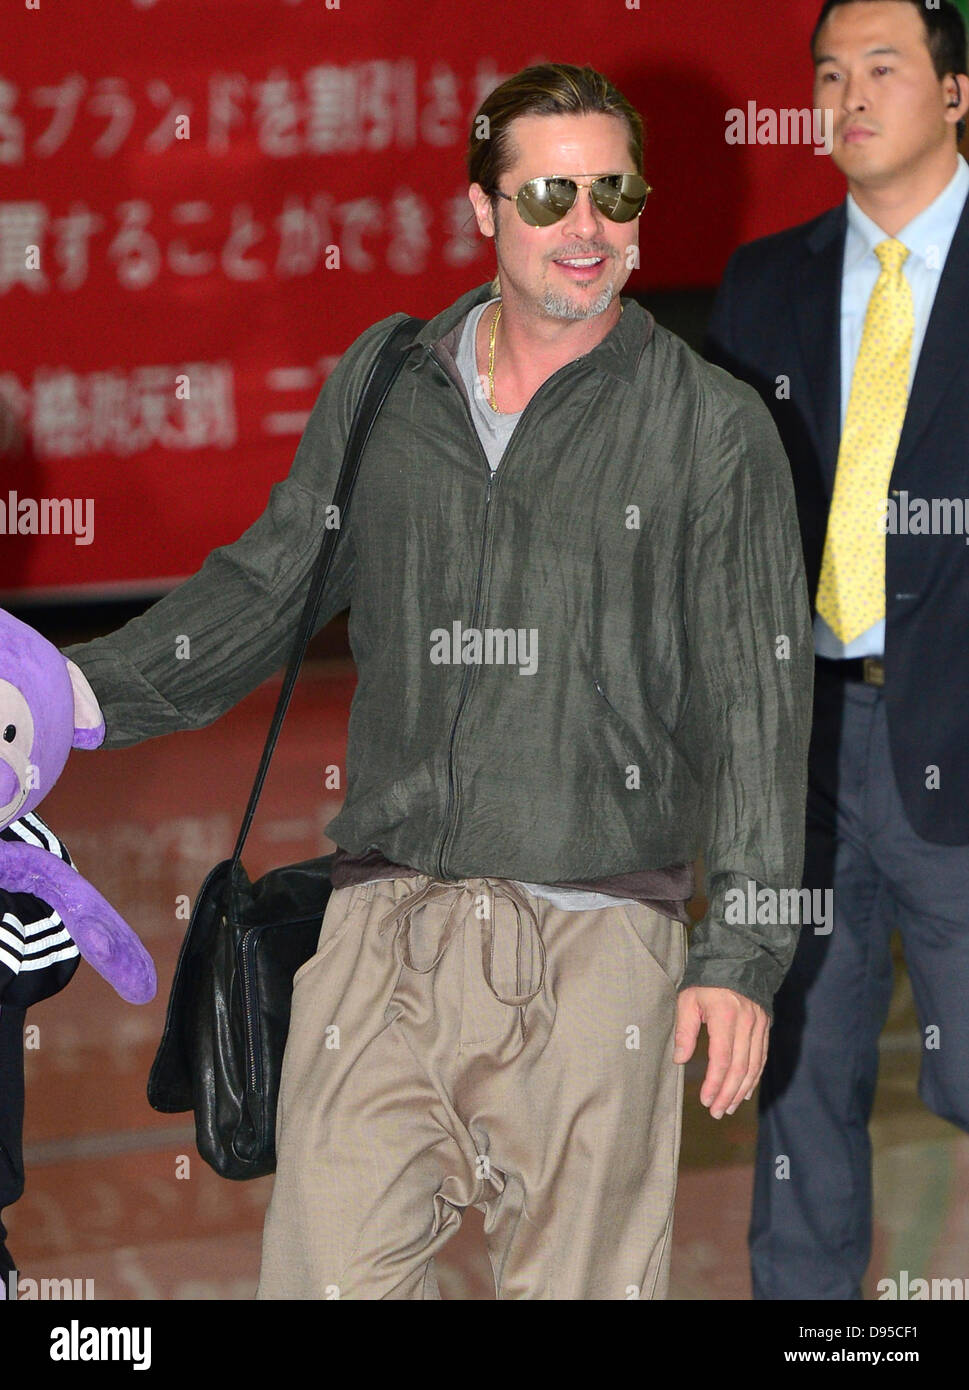 Seoul, SOUTH KOREA. 11th June, 2013. Actor Brad Pitt and Pax Thien Jolie-Pitt arrive at Gimpo Airport on June 11, 2013 in Seoul, South Korea. Credit: Credit:  Janabp/Jana Press/ZUMAPRESS.com/Alamy Live News Stock Photo